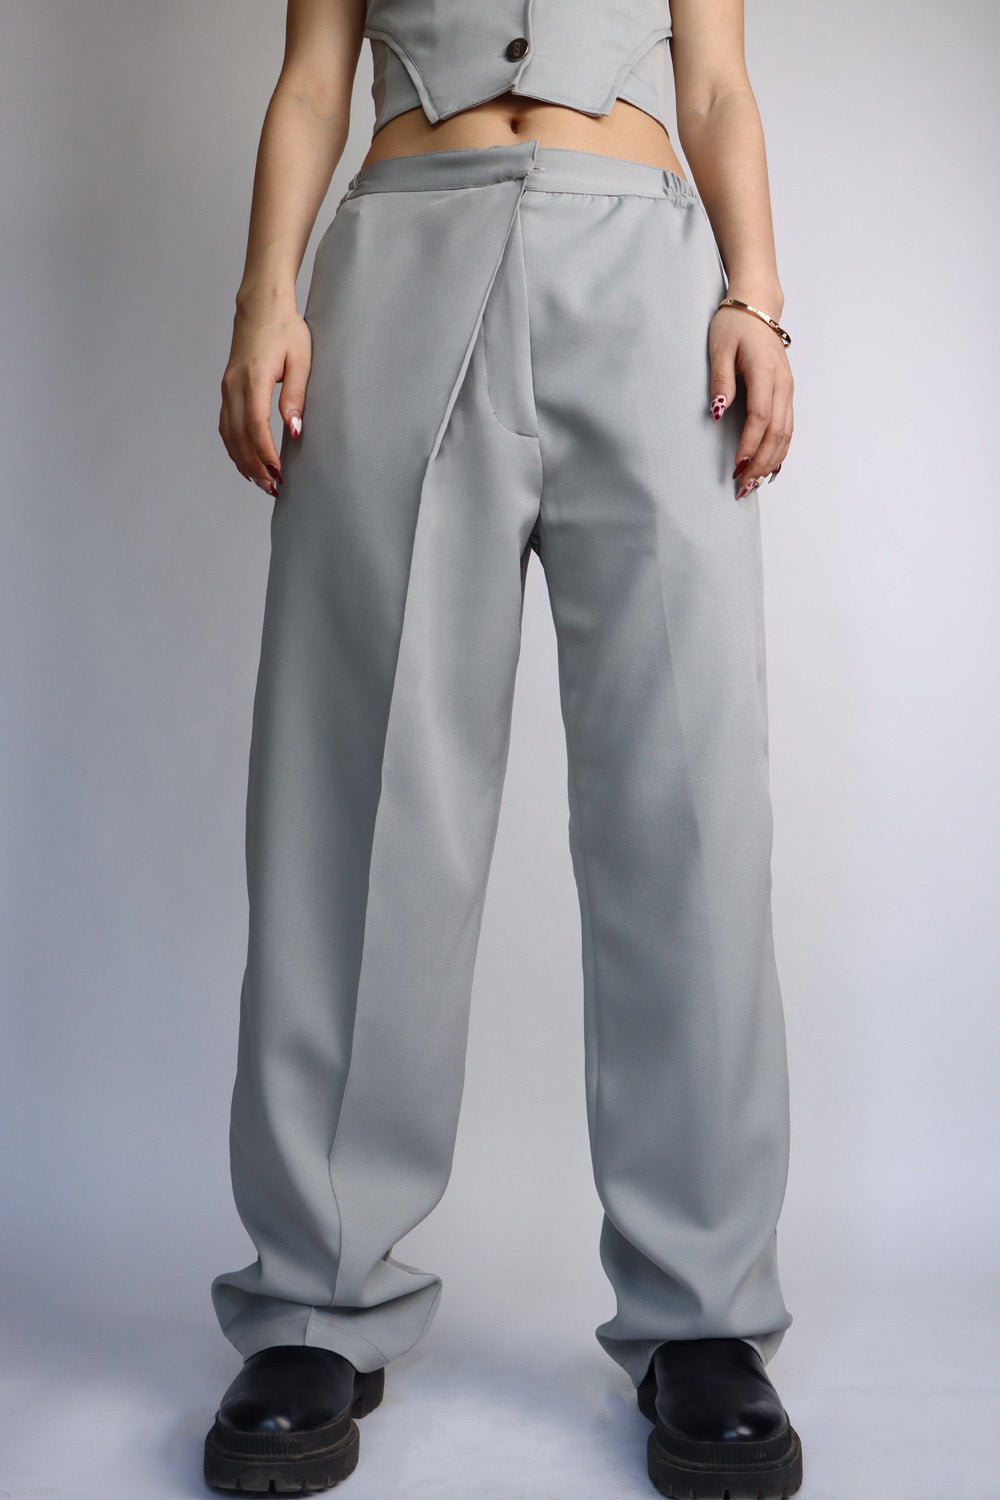 Cool Grey Off-Balance Wide Legged Pants - BEEGLEE